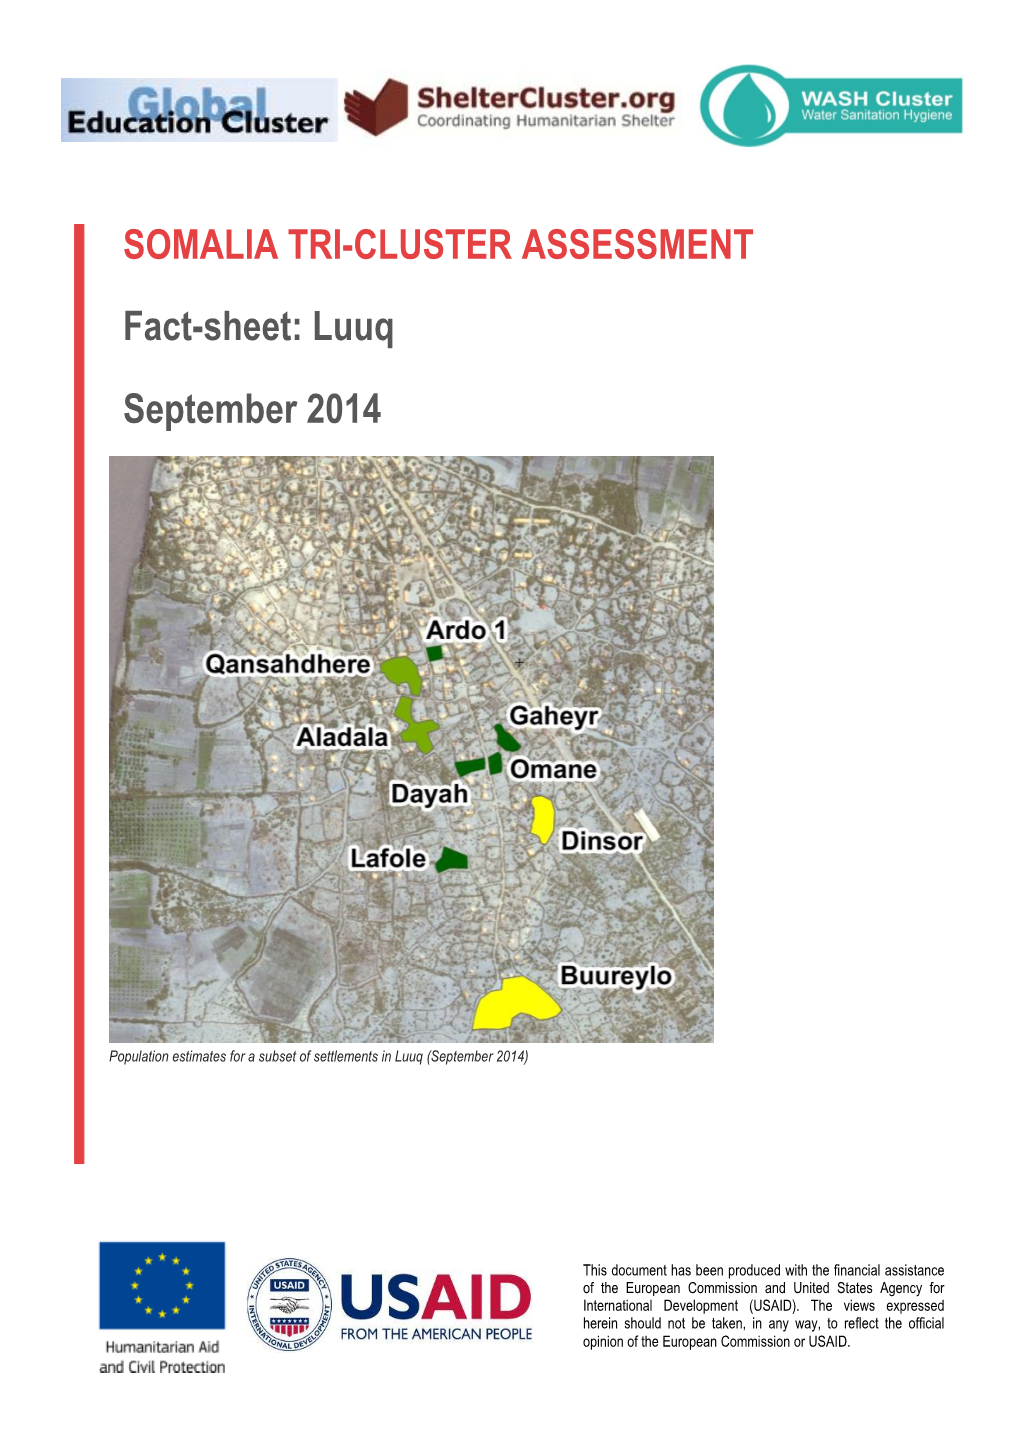 SOMALIA TRI-CLUSTER ASSESSMENT Fact-Sheet: Luuq